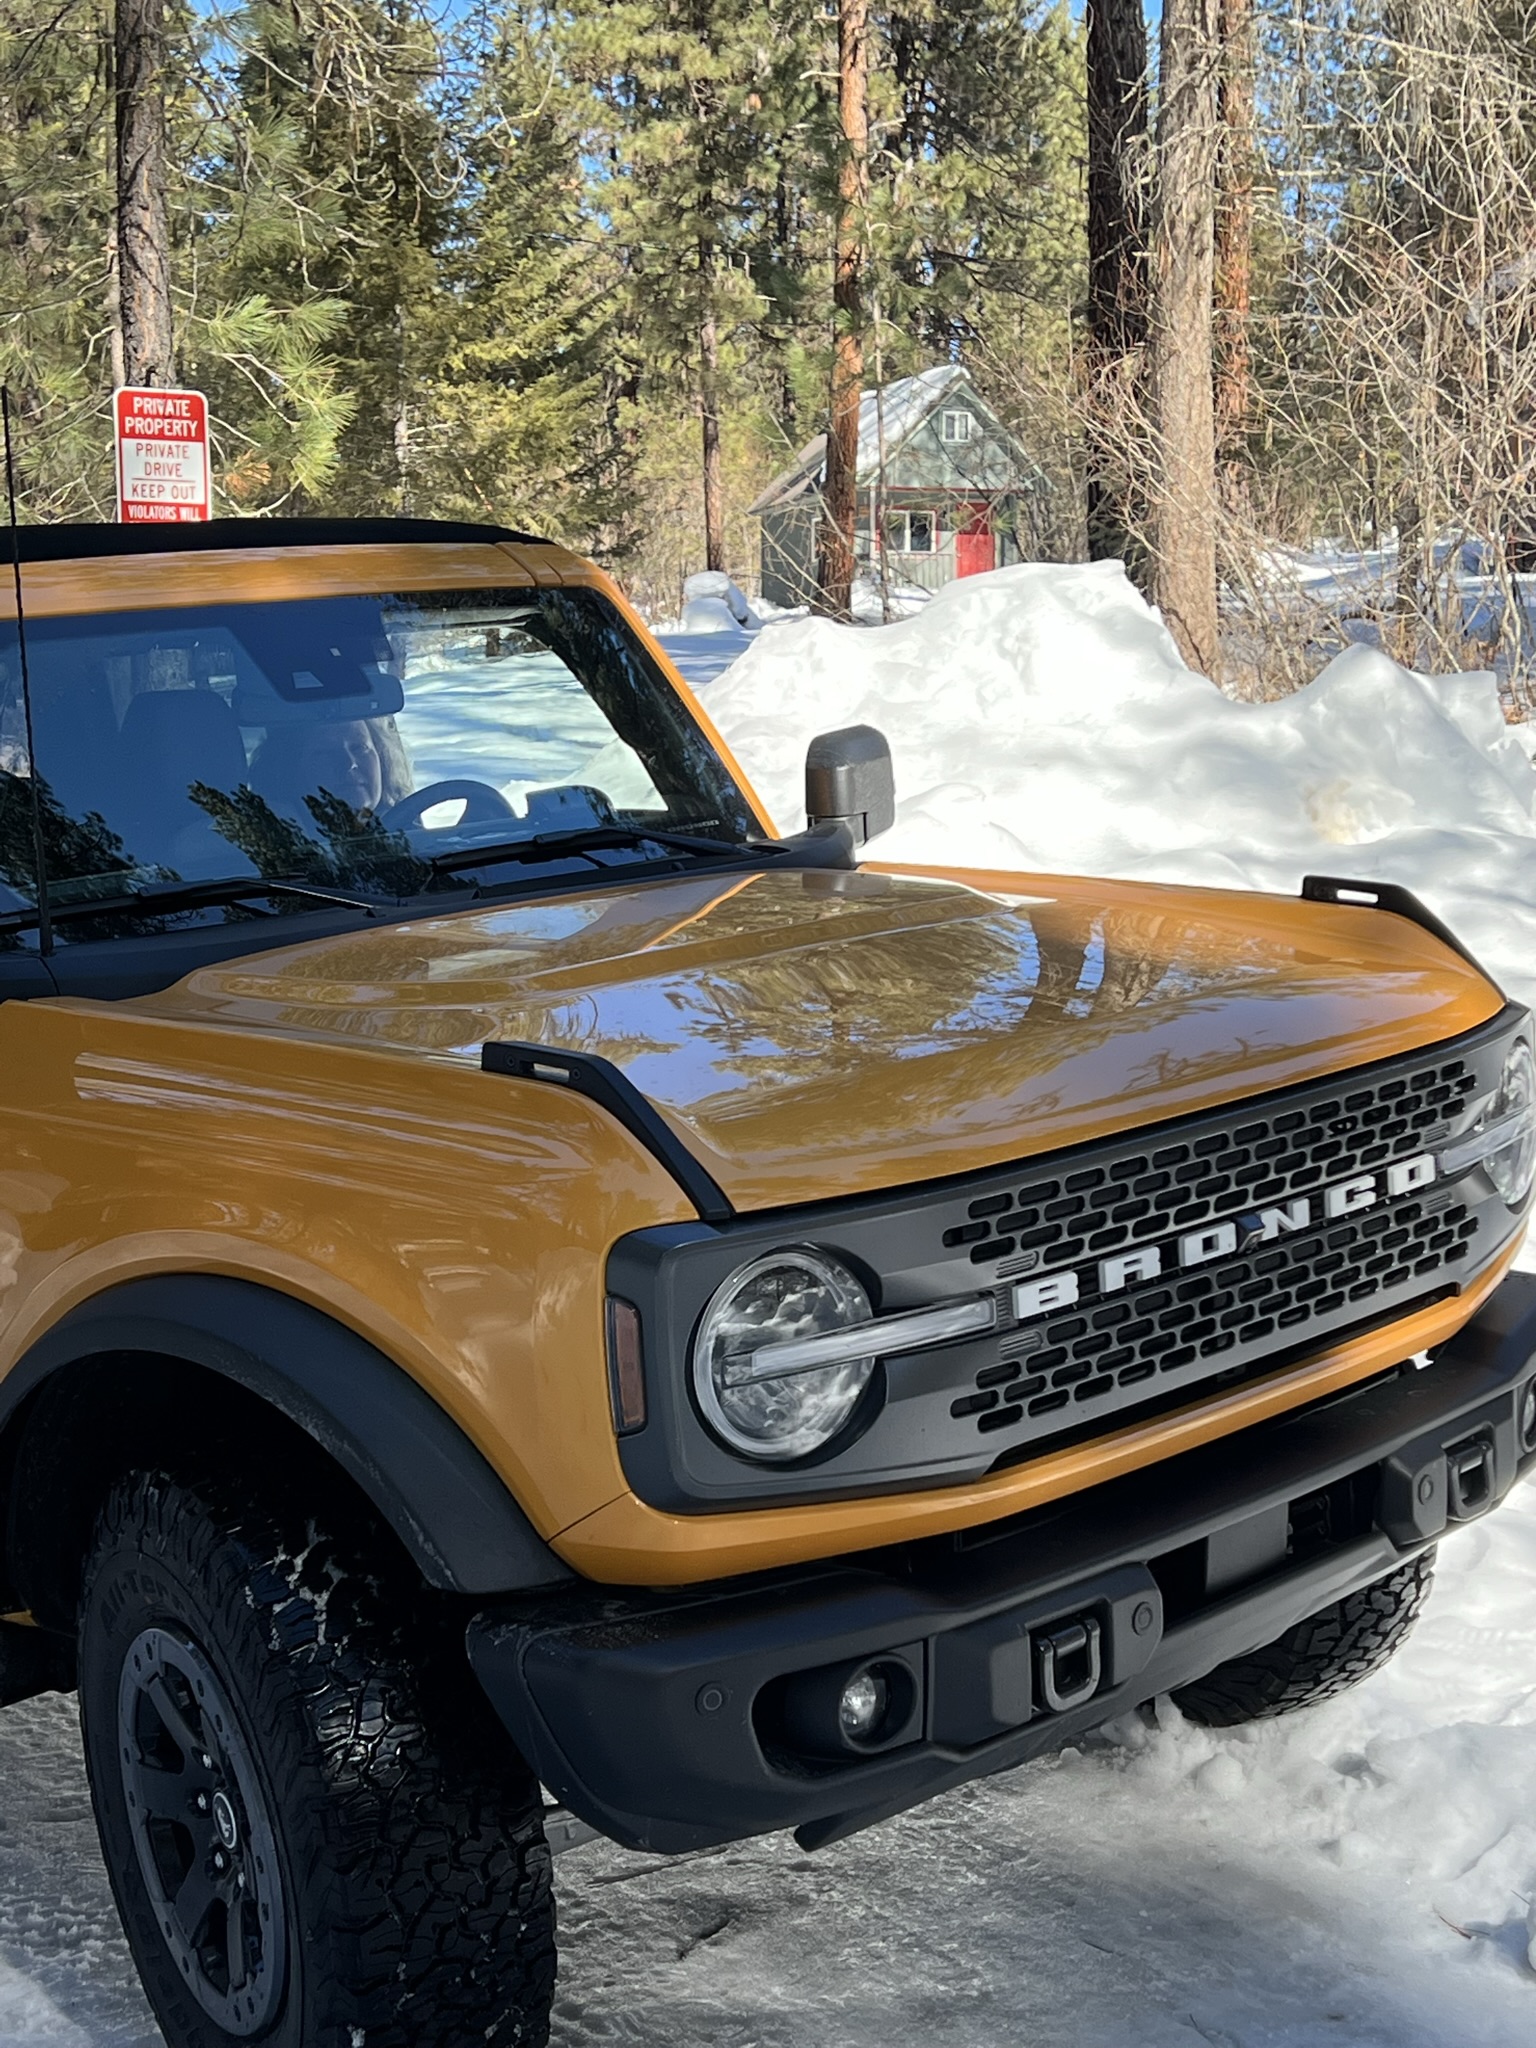 Ford Bronco Show us your Bronco snow pics!! ☃️❄️🥶 E4CFC090-5F0D-4C1A-8D61-DEE829FABF00